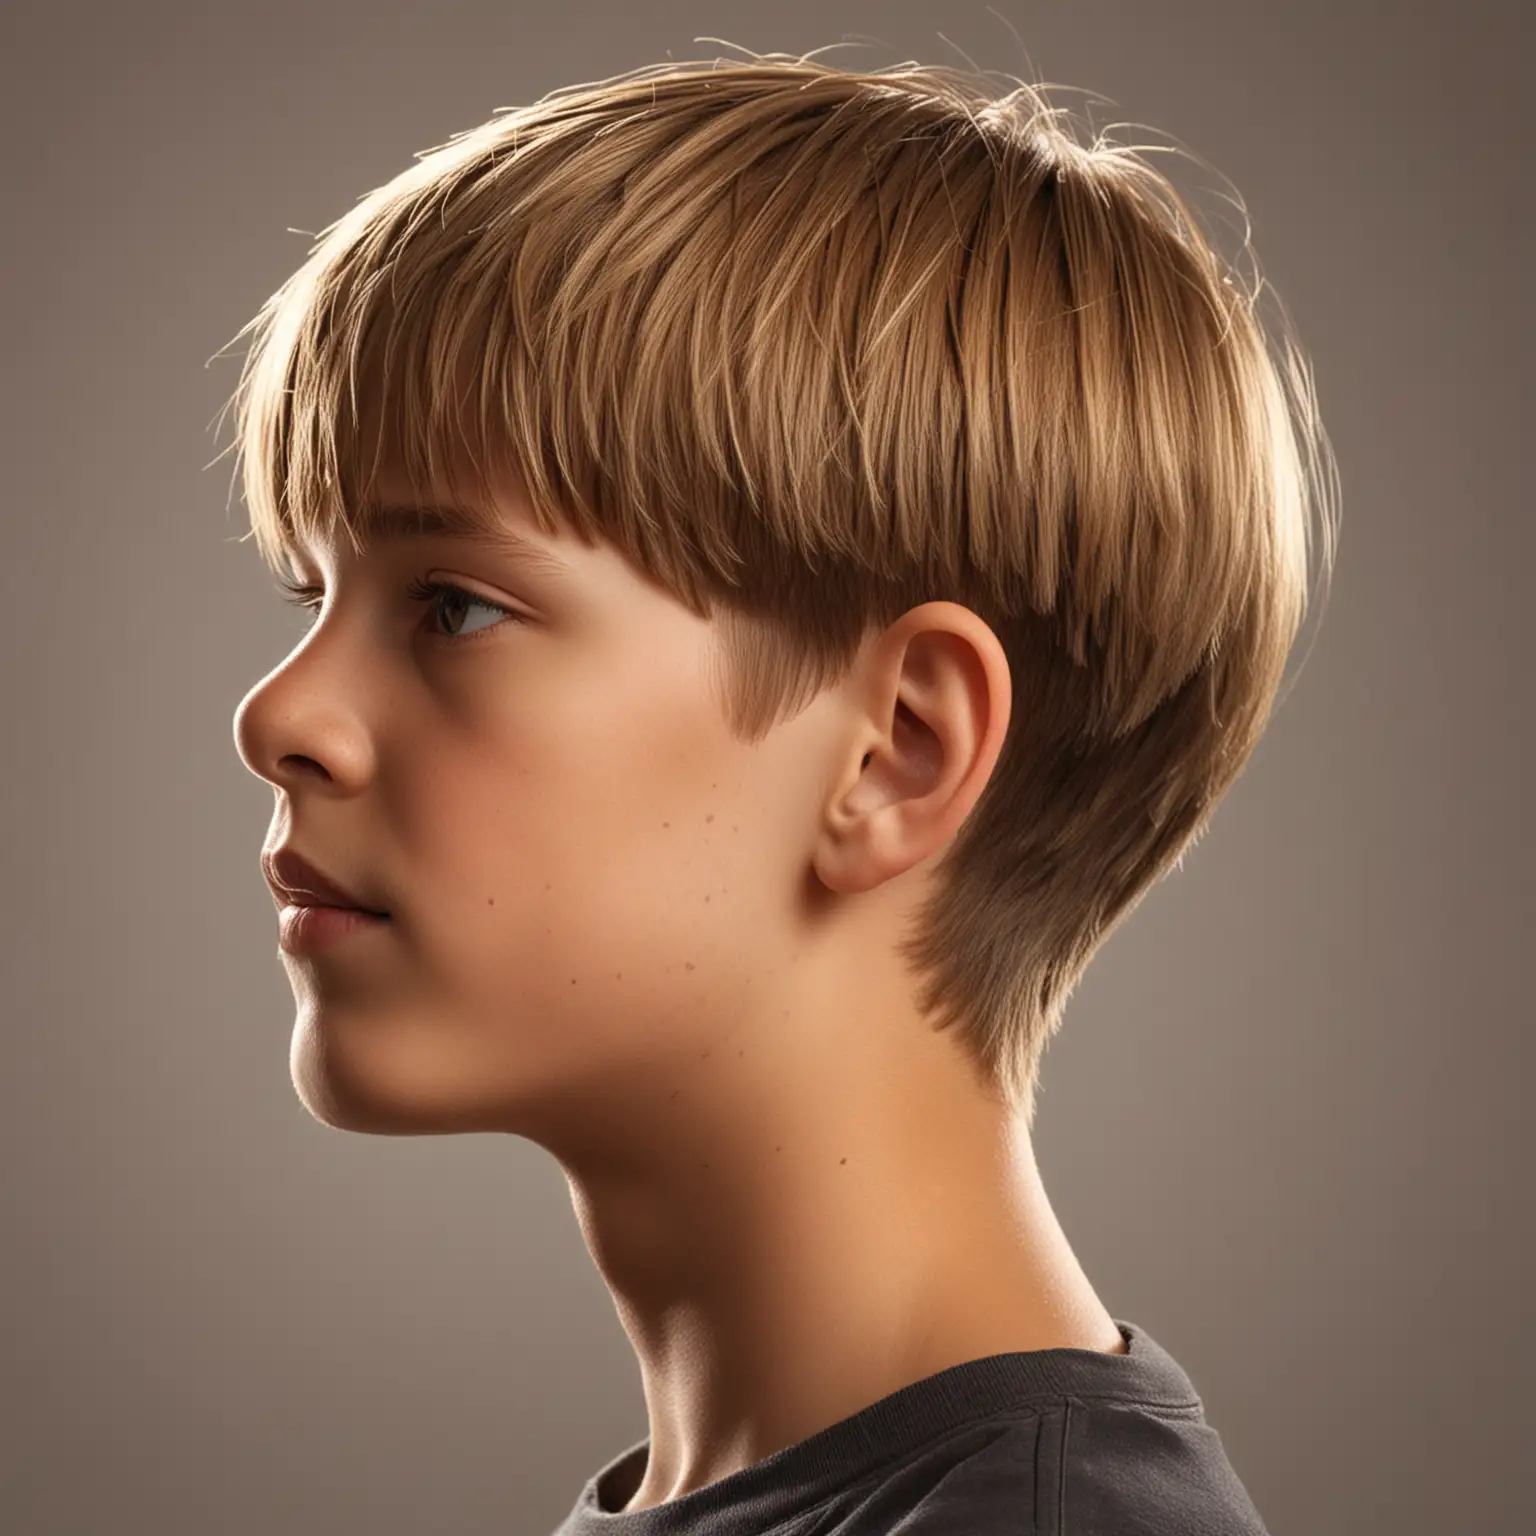 Studio Portrait of a TwelveYearOld Boy with Sunlit Bowl Haircut